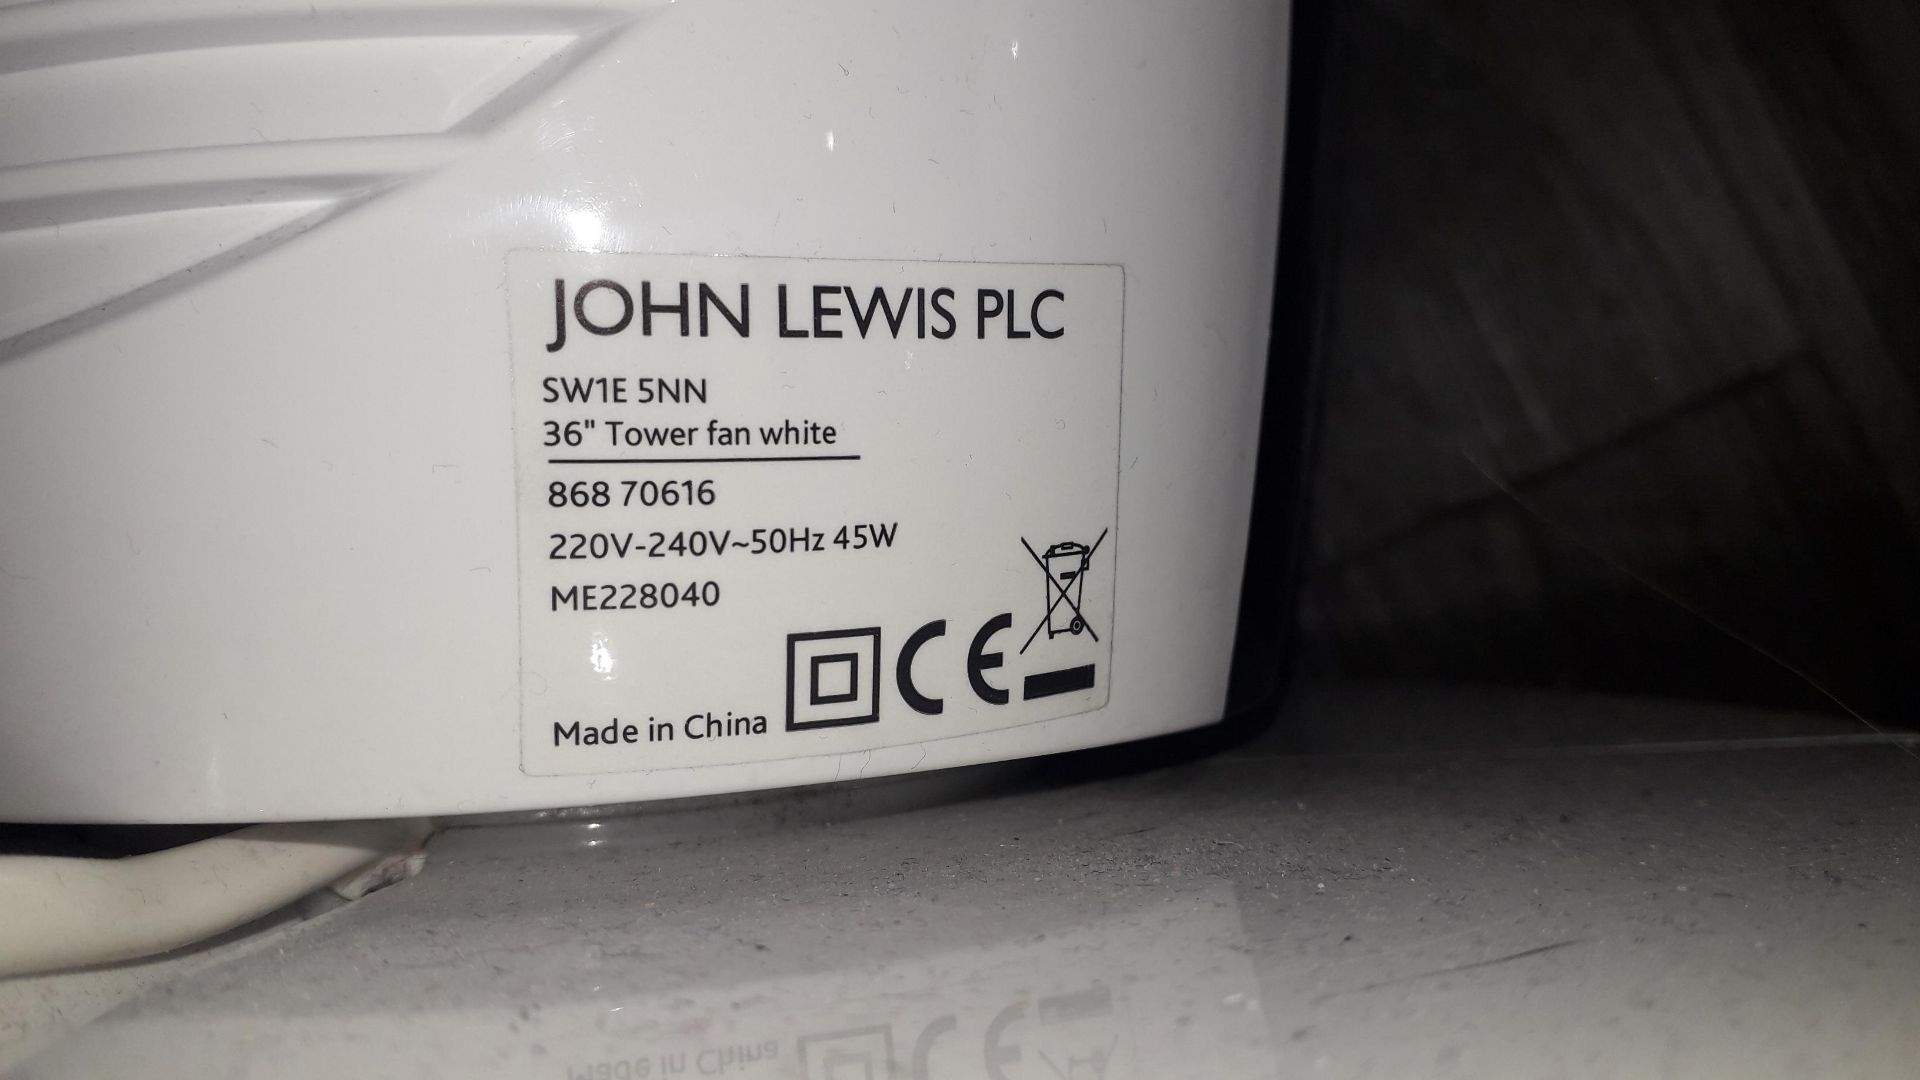 John Lewis 16” Tower Fan, serial number 86870616 - Image 2 of 2